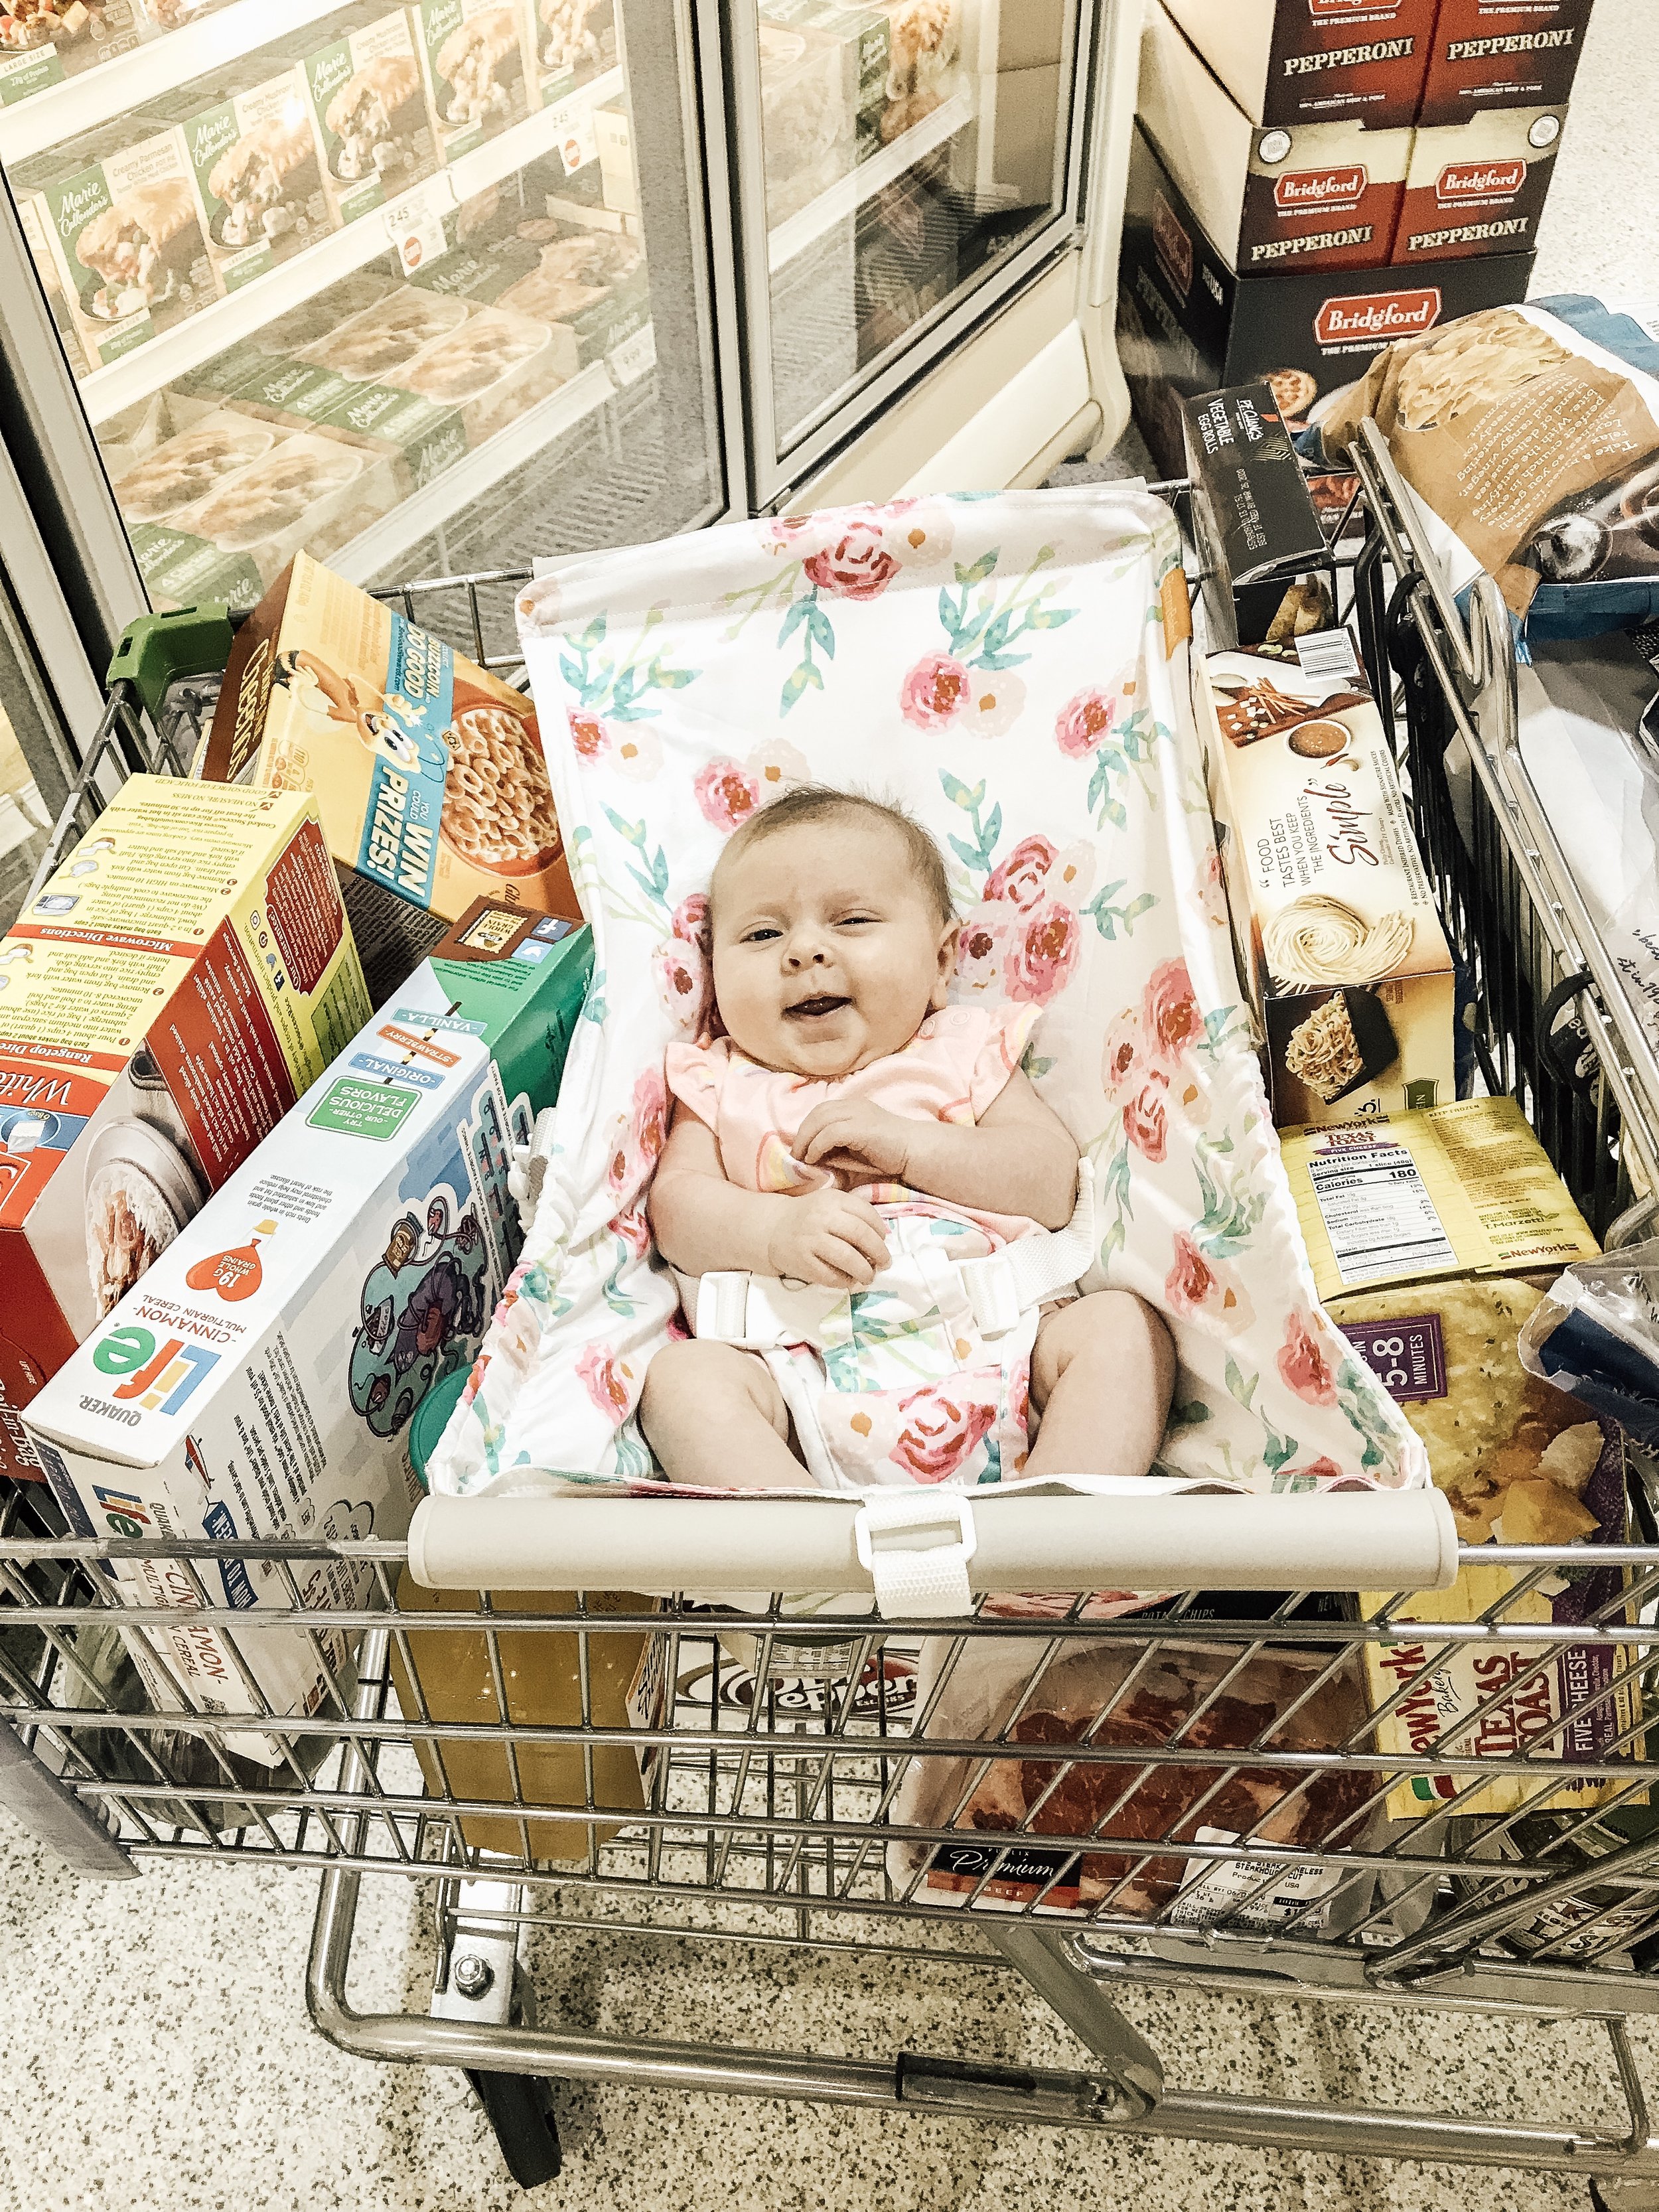 buy buy baby shopping cart